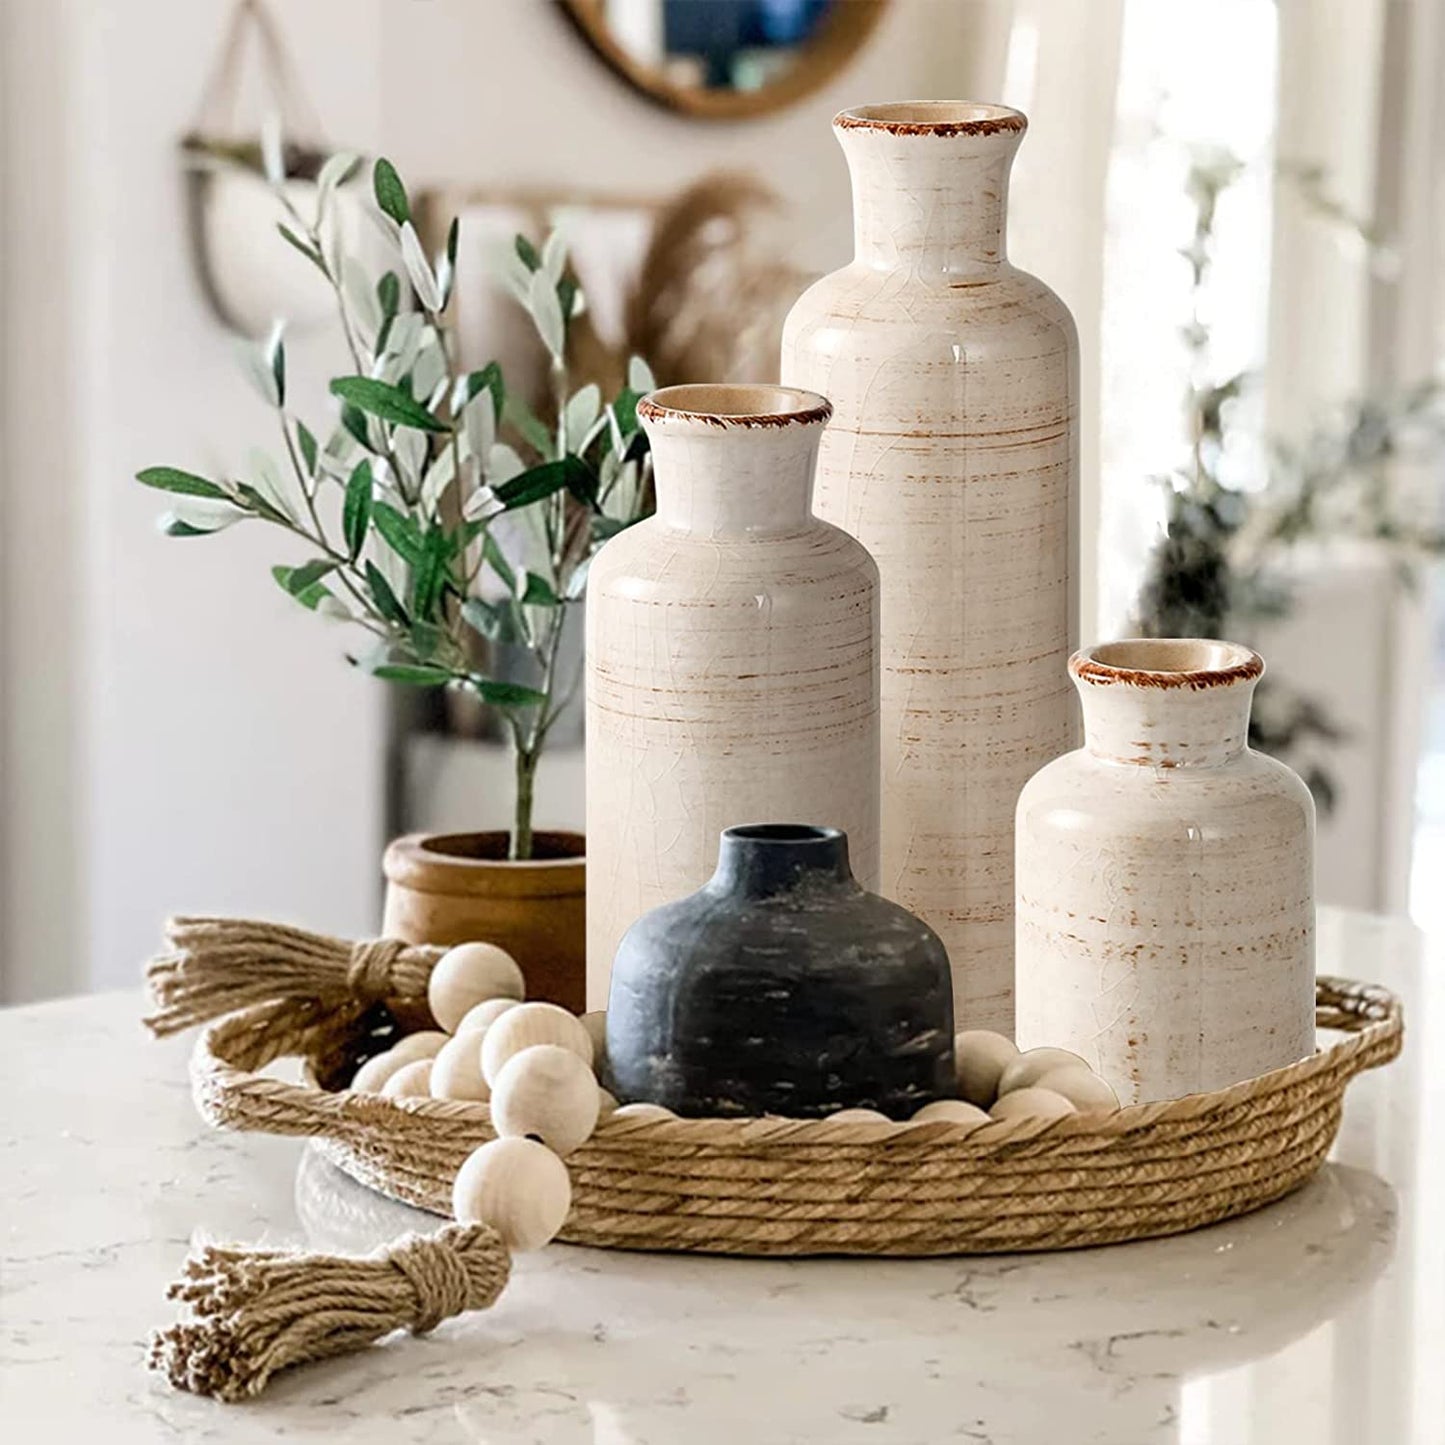 Ceramic Vase for Decor Set of 3 Small Vases, Vases for Rustic Home Decor Accent, Modern Farmhouse Vase Sets for Living Room Decorations, Ideal Shelf Décor, Table, Bookshelf, Entryway